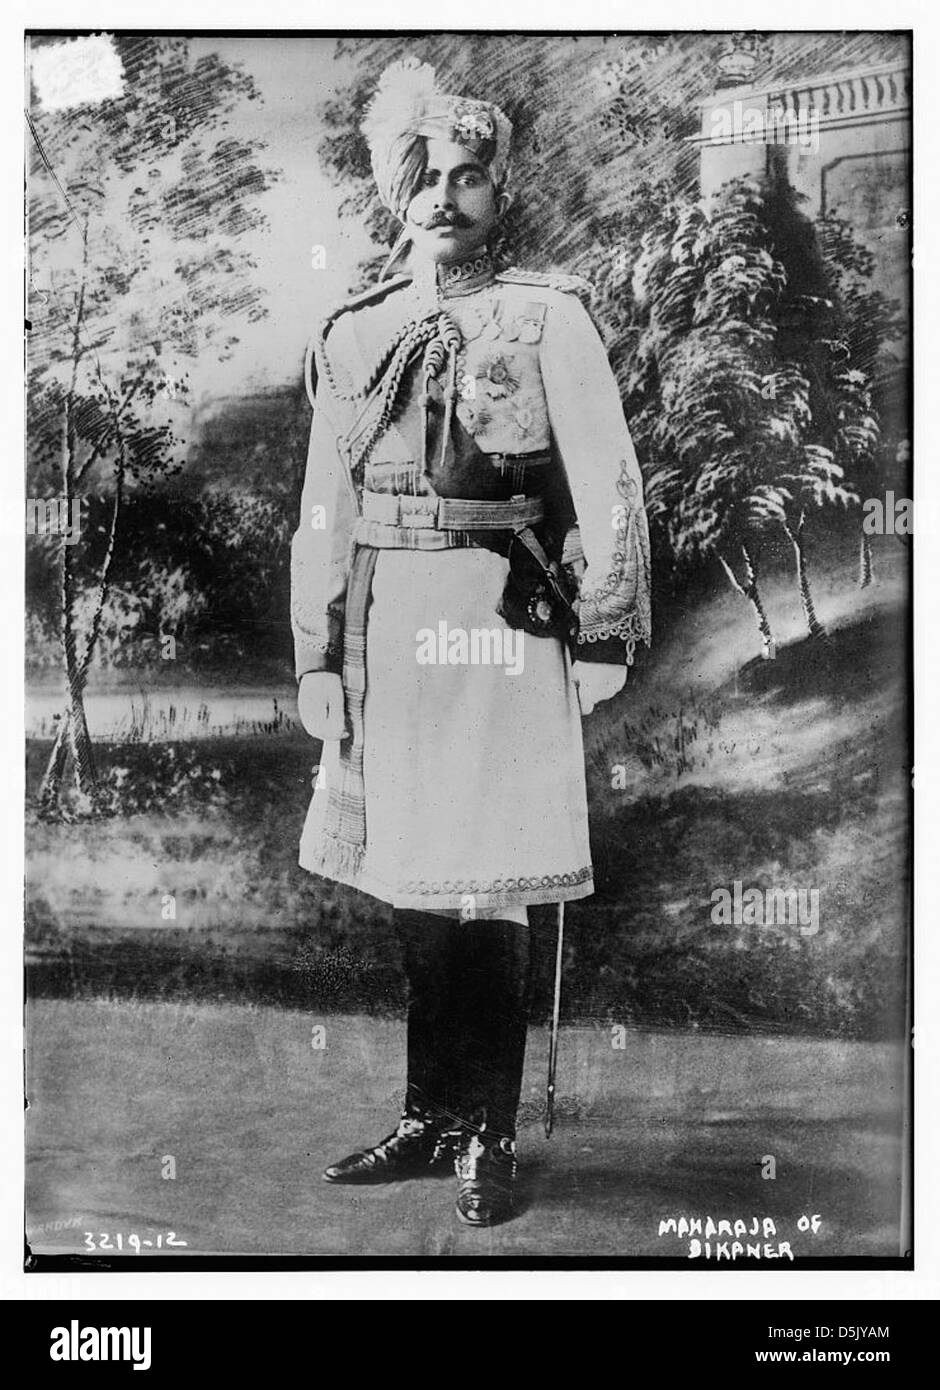 Maharaja of Bikaner (LOC) Stock Photo